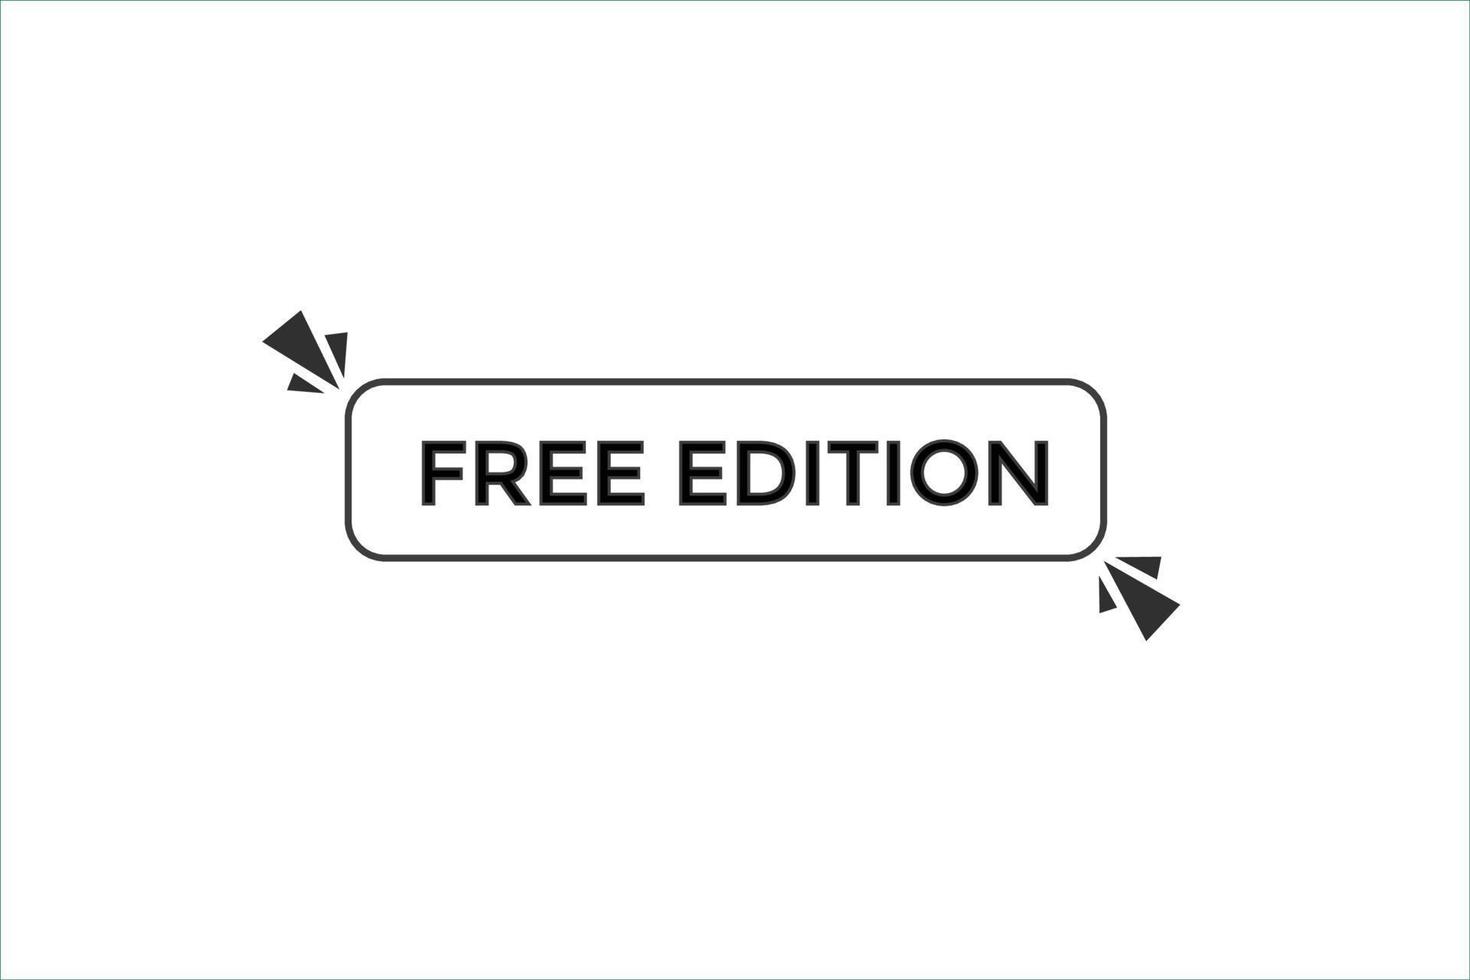 free edition vectors.sign label bubble speech free edition vector